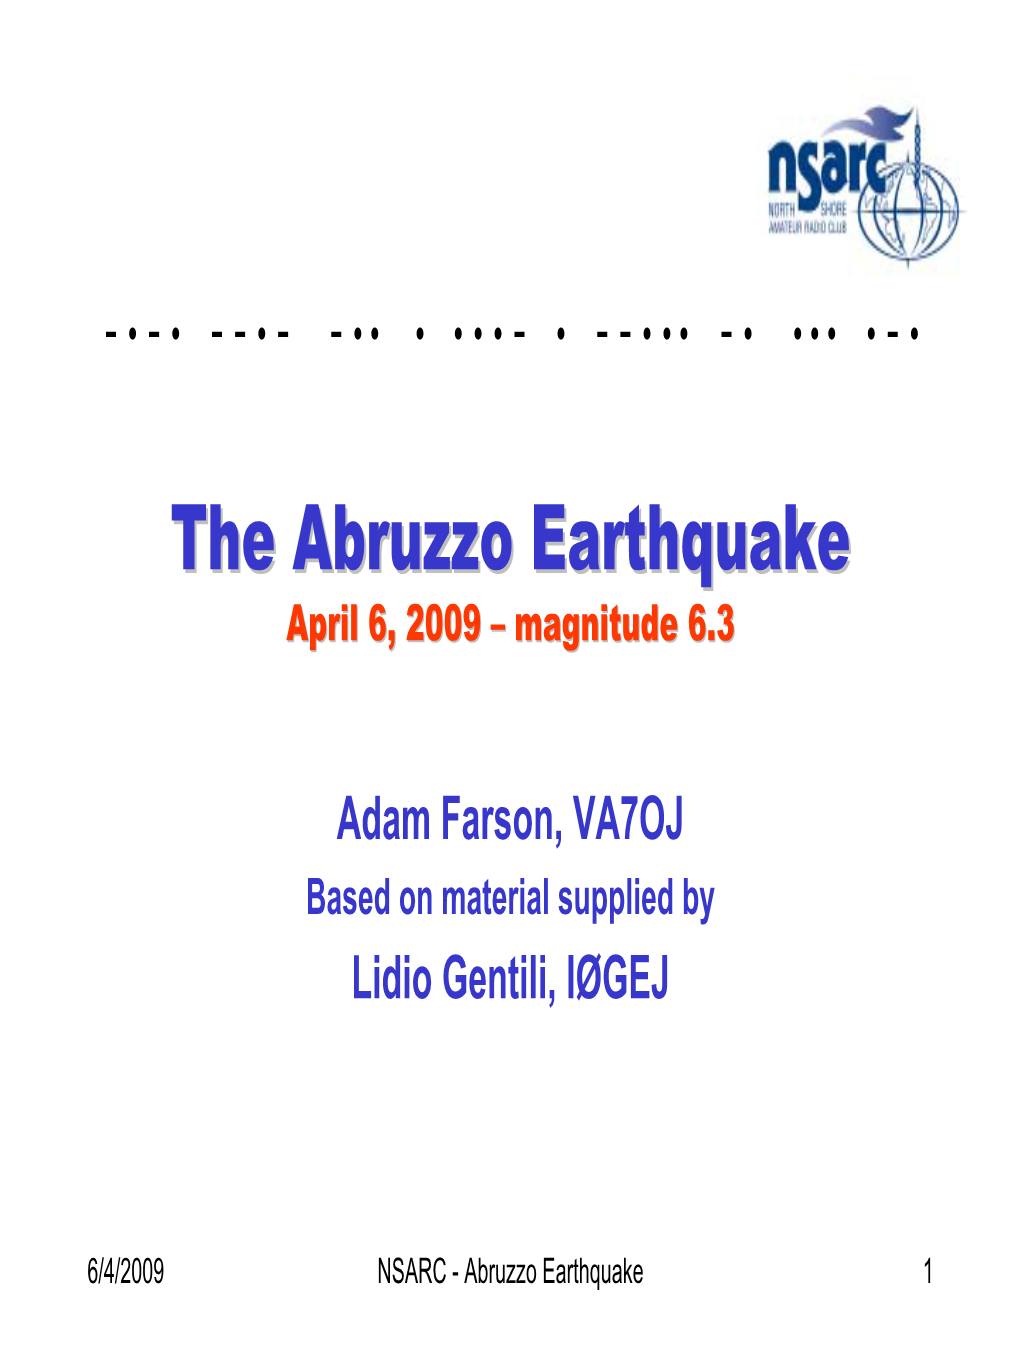 The Abruzzo Earthquake of 6 April 2009